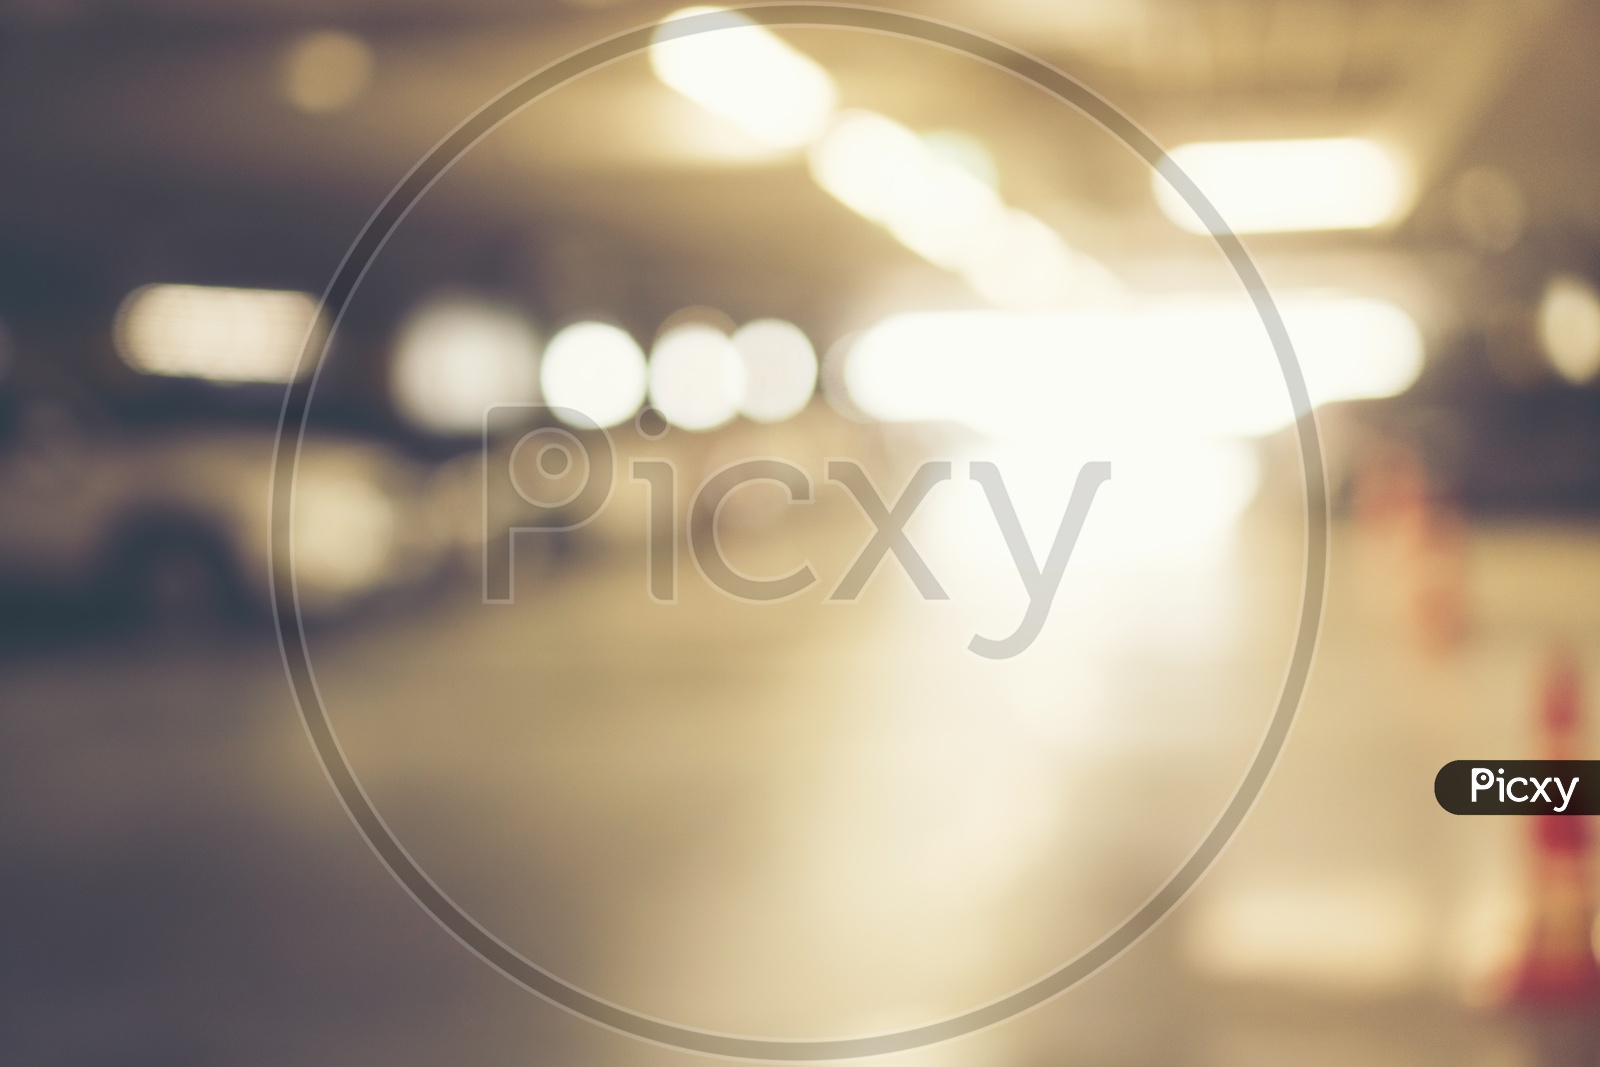 Abstract blur car parking lot for background, vintage filter image